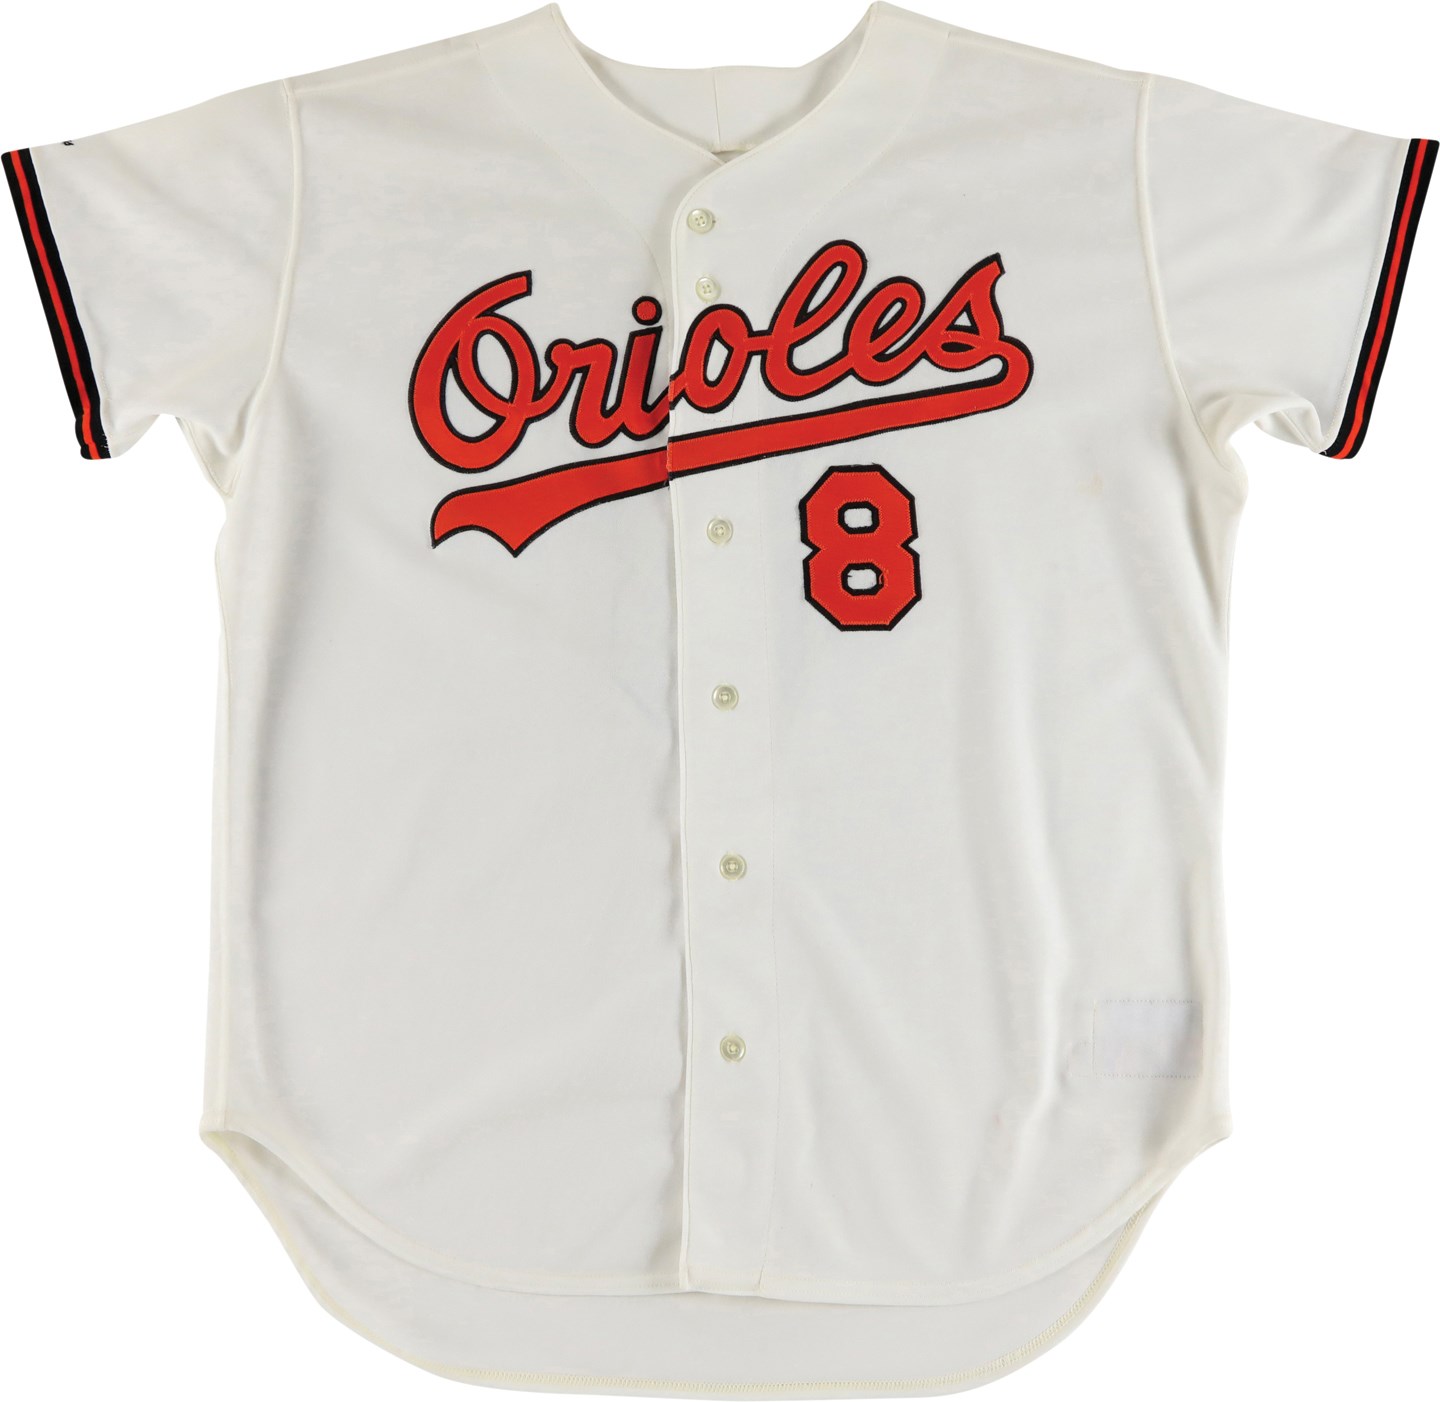 Baseball Equipment - 1990 Cal Ripken Jr. Baltimore Orioles Game Worn Jersey